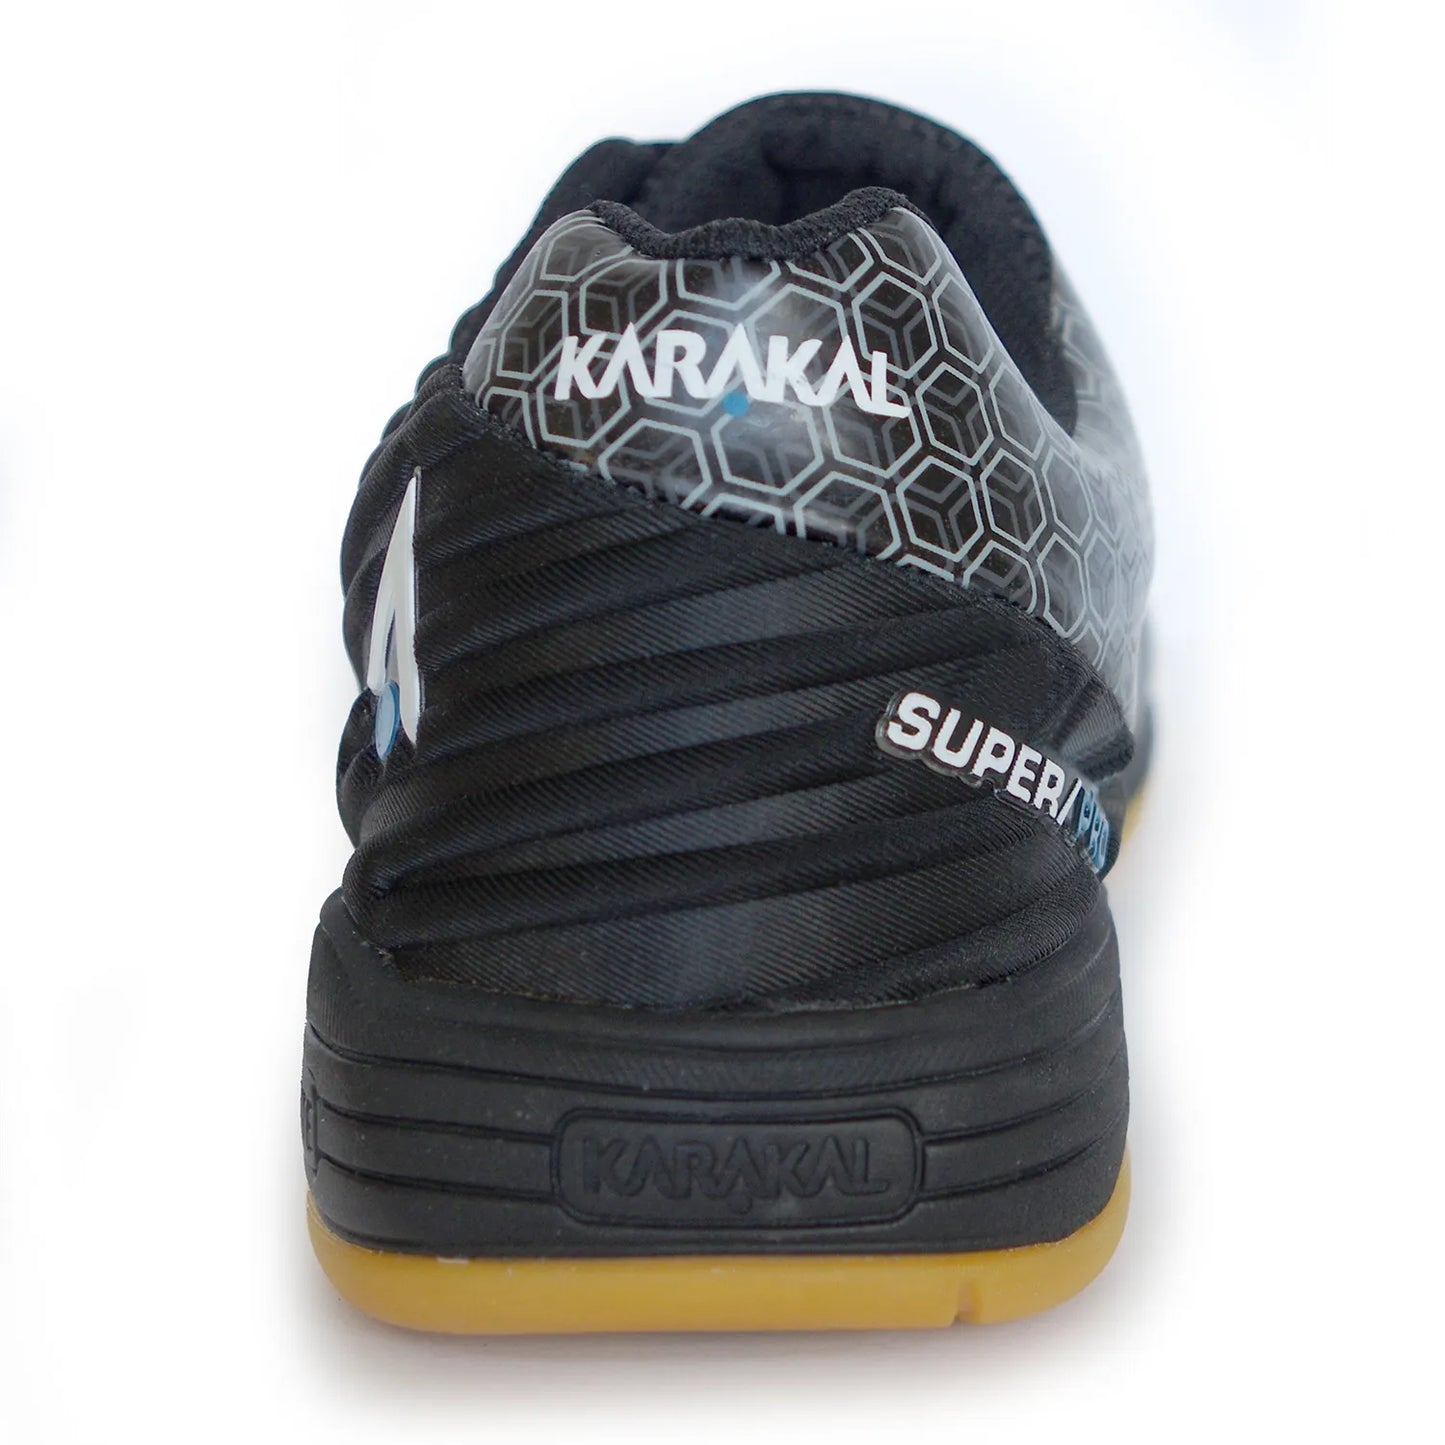 Karakal SuperPro Court Shoe